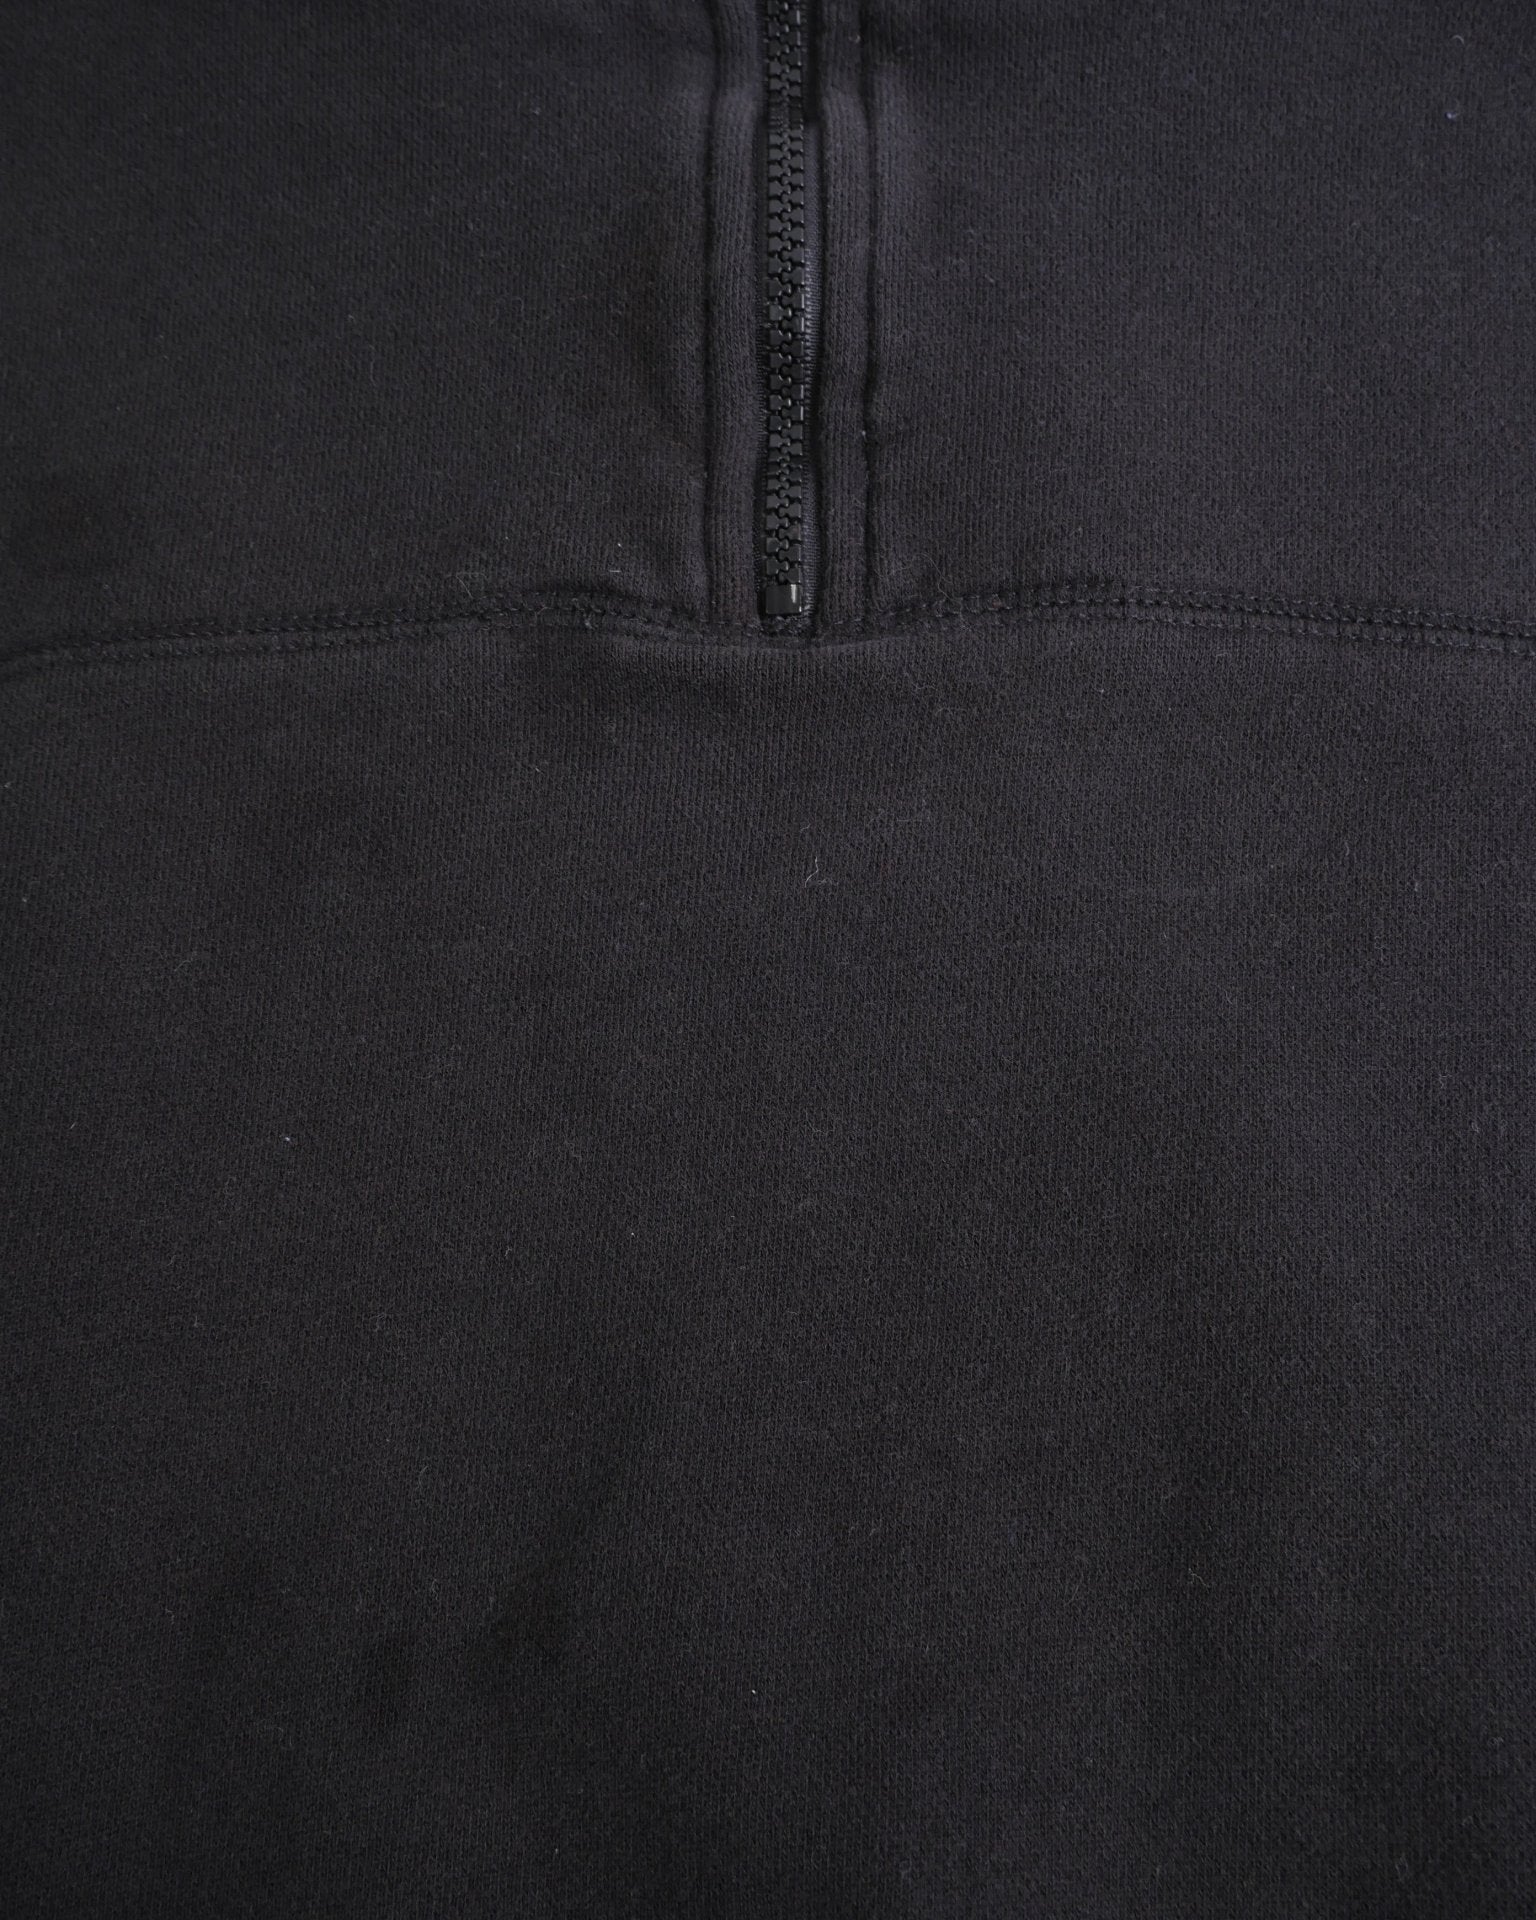 Fila printed Logo black Half Zip Sweater - Peeces